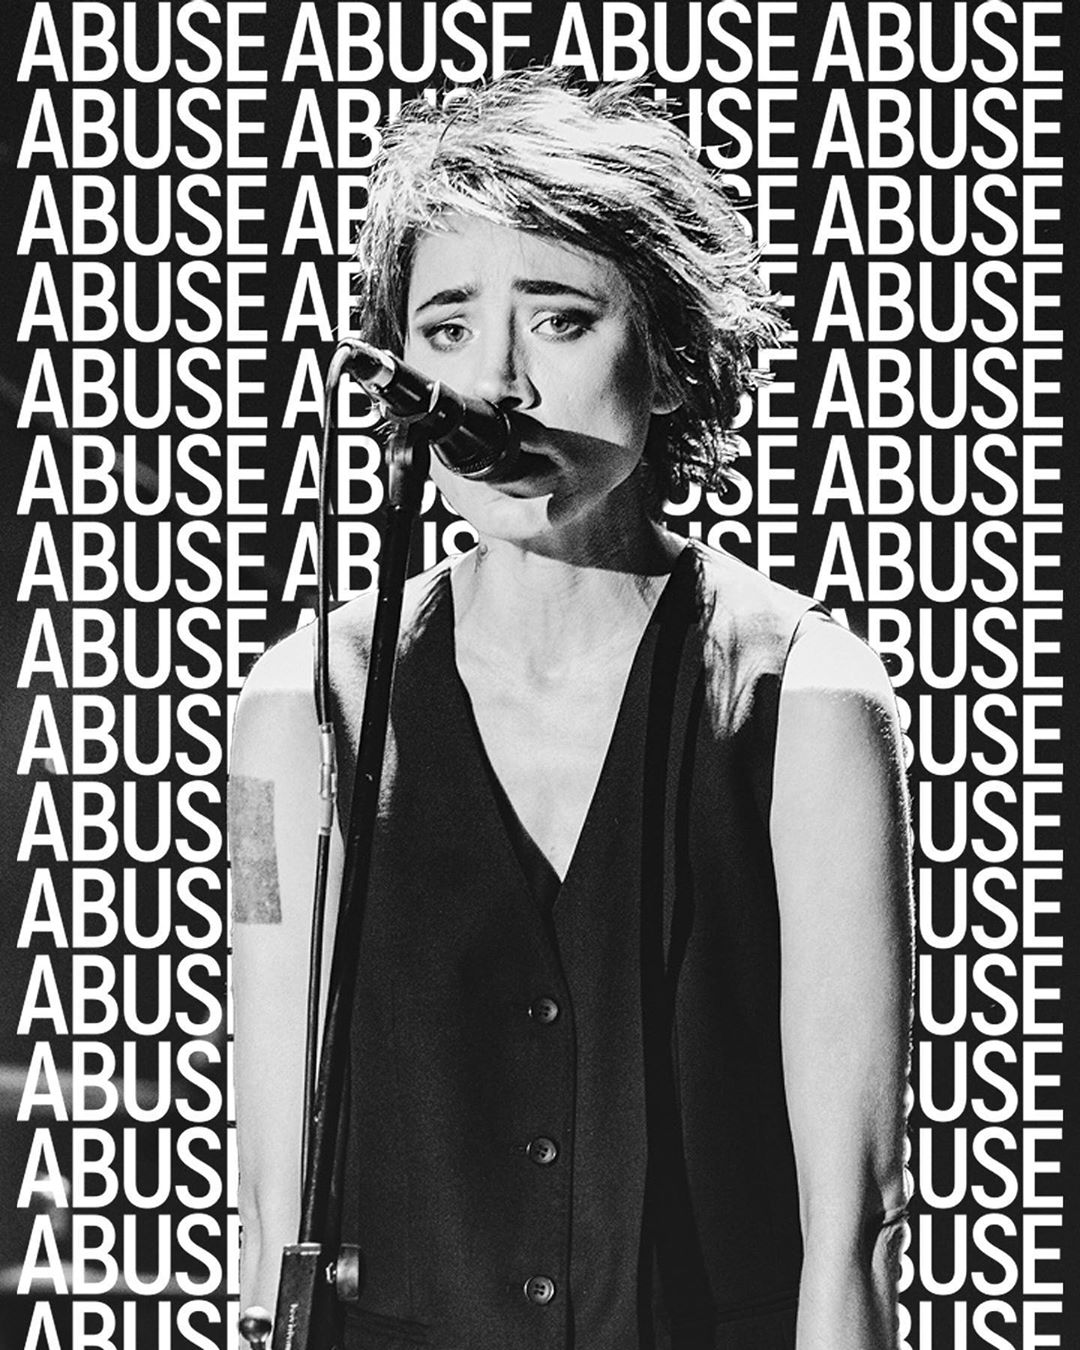 Земфира - Abuse

photo: @marinazakharova 
design: @kuzmenko_nikita

#земфира #абьюз #zemfira #abuse